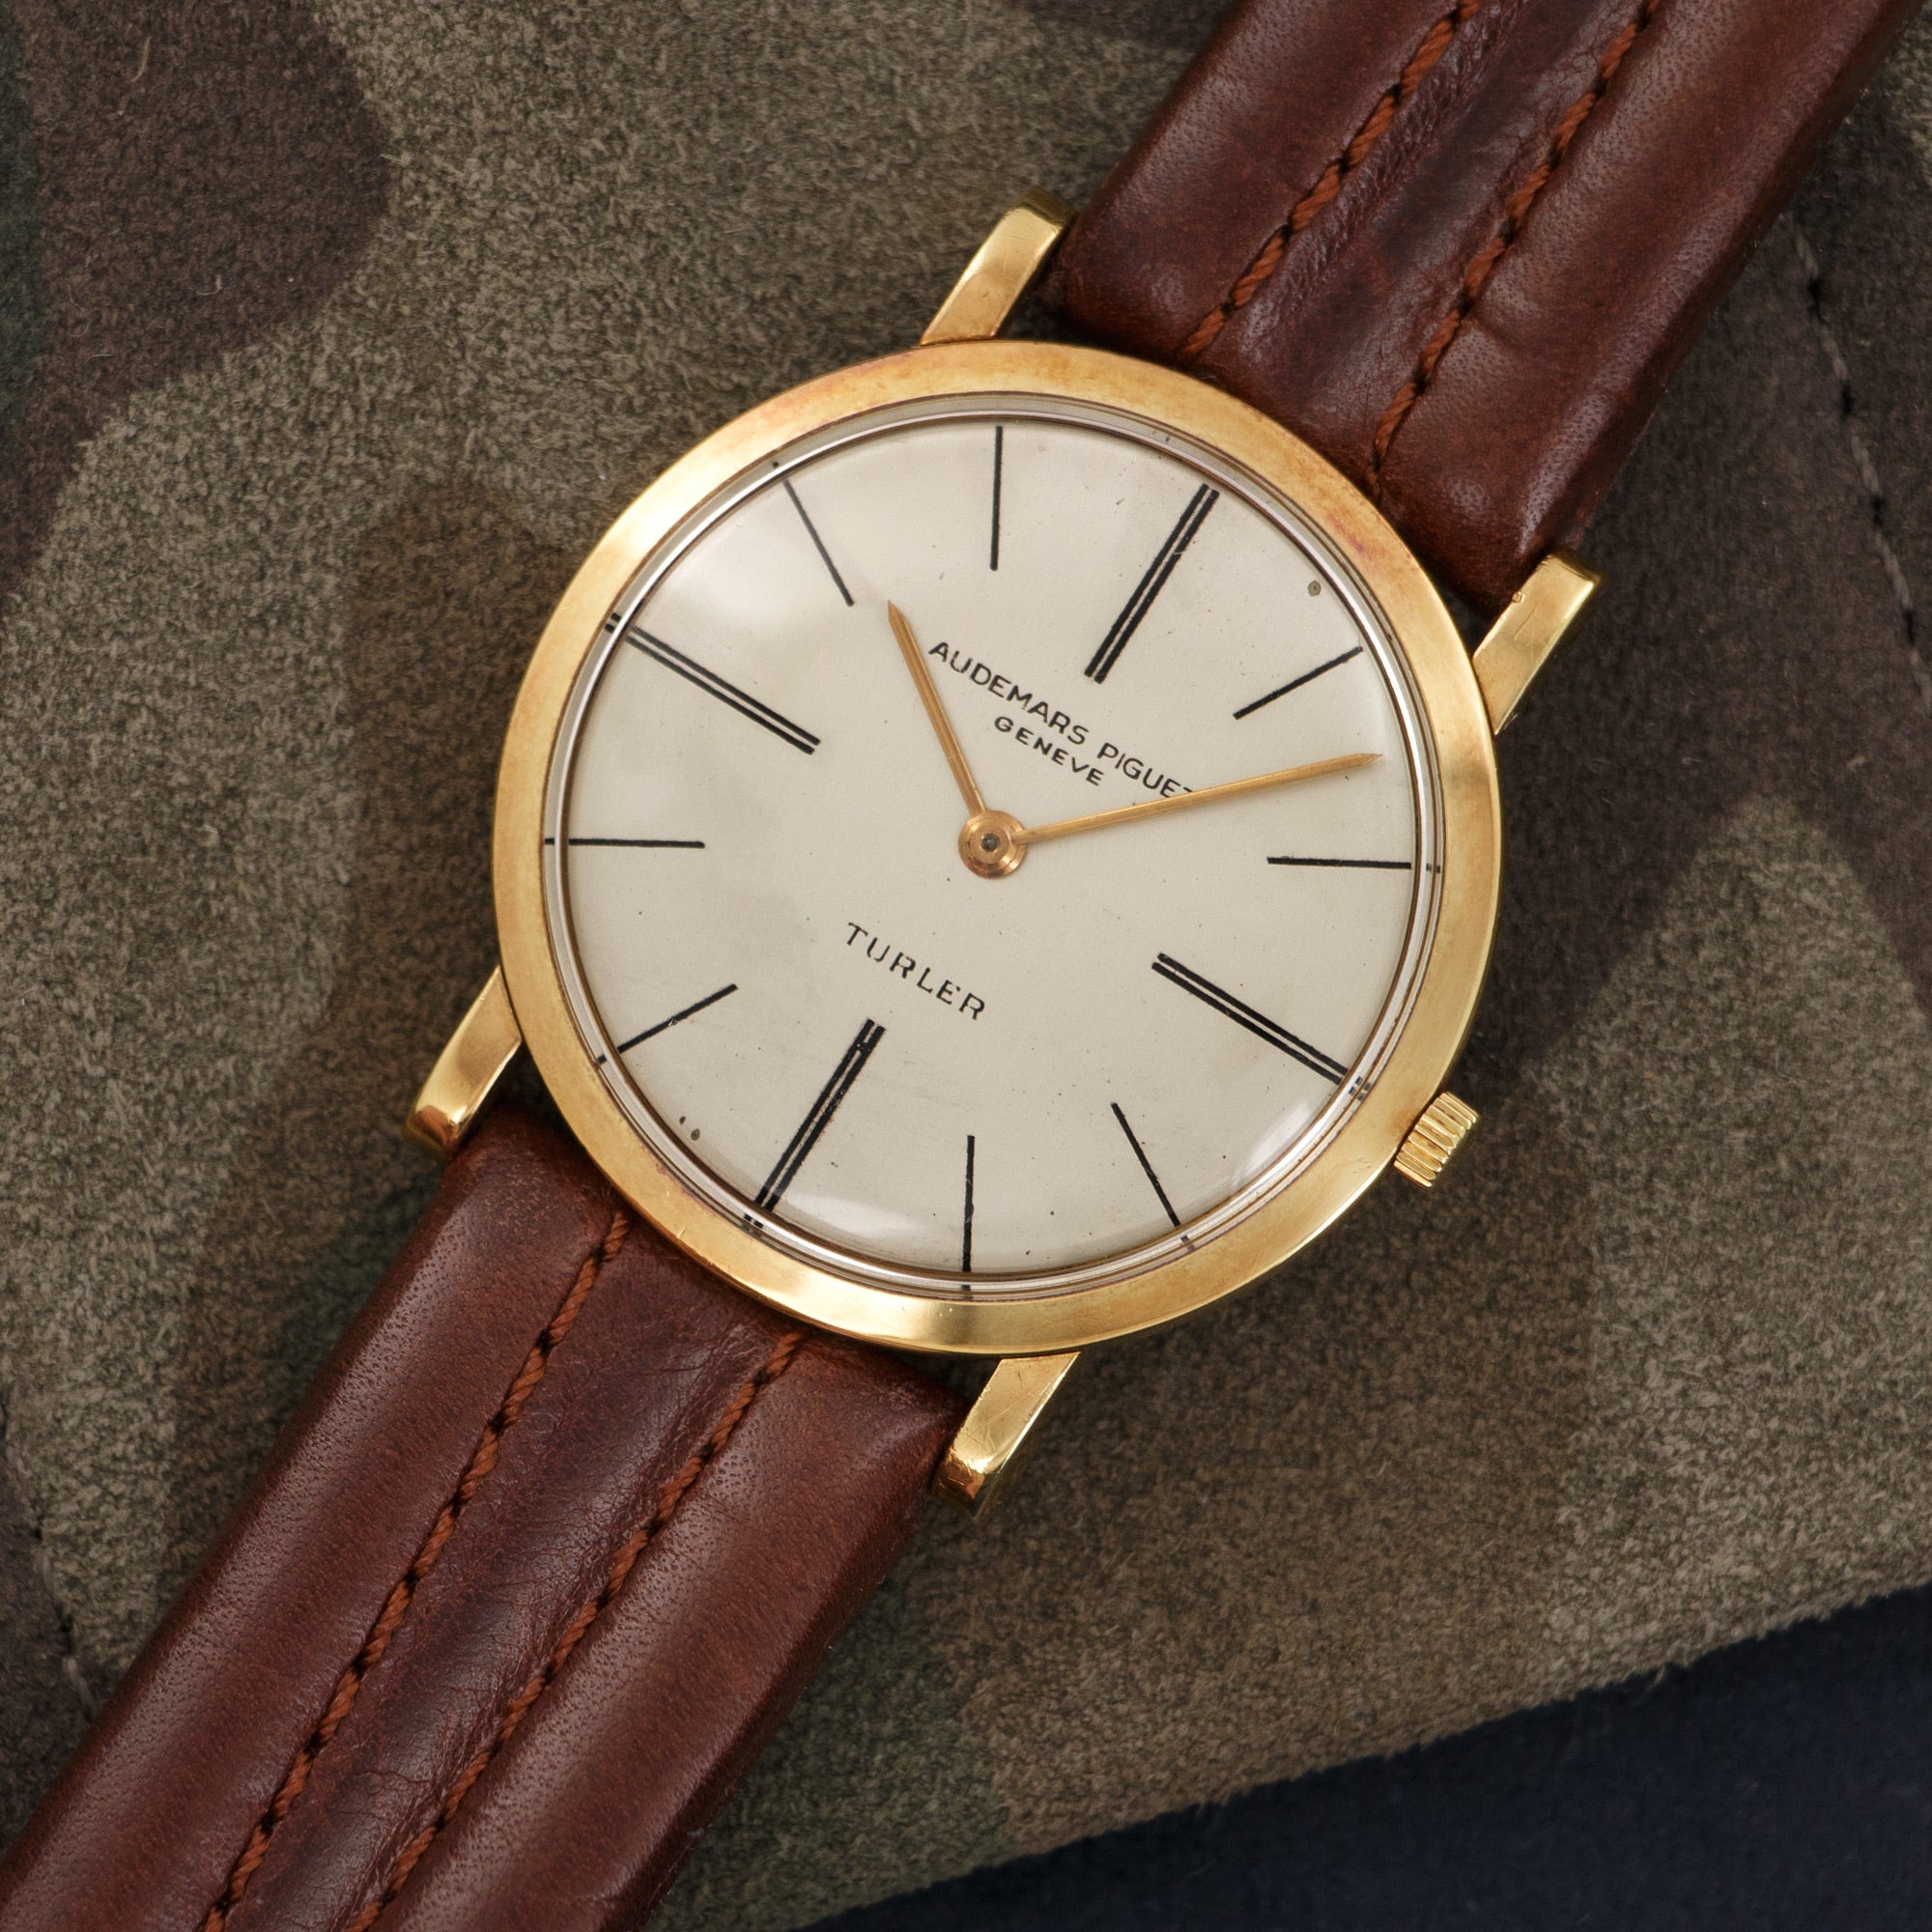 Audemars Piguet - Audemars Piguet Yellow Gold Ultra-Thin Strap Watch, Retailed by Turler - The Keystone Watches